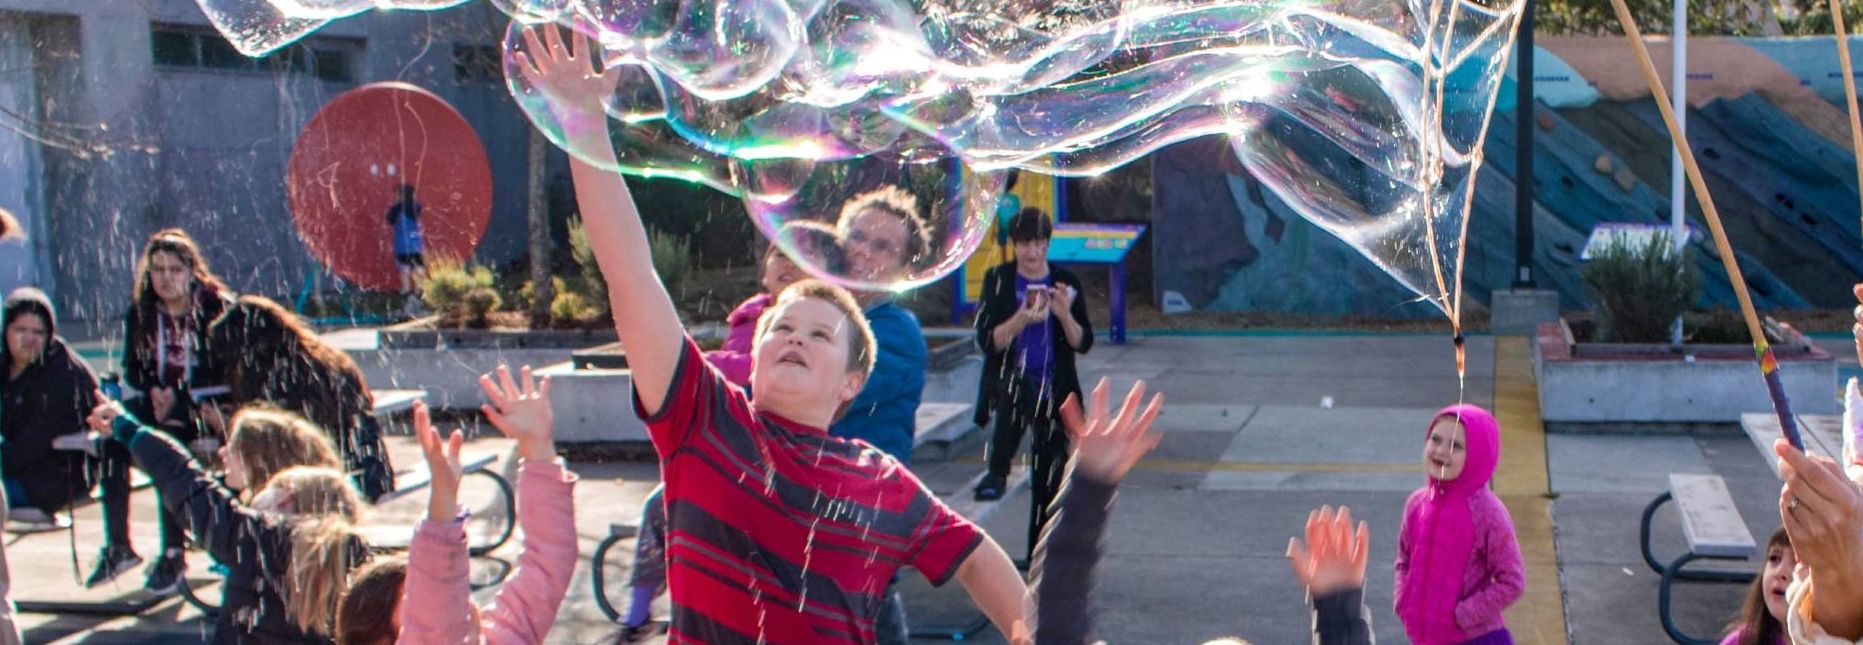 SW Event Children chasing bubbles